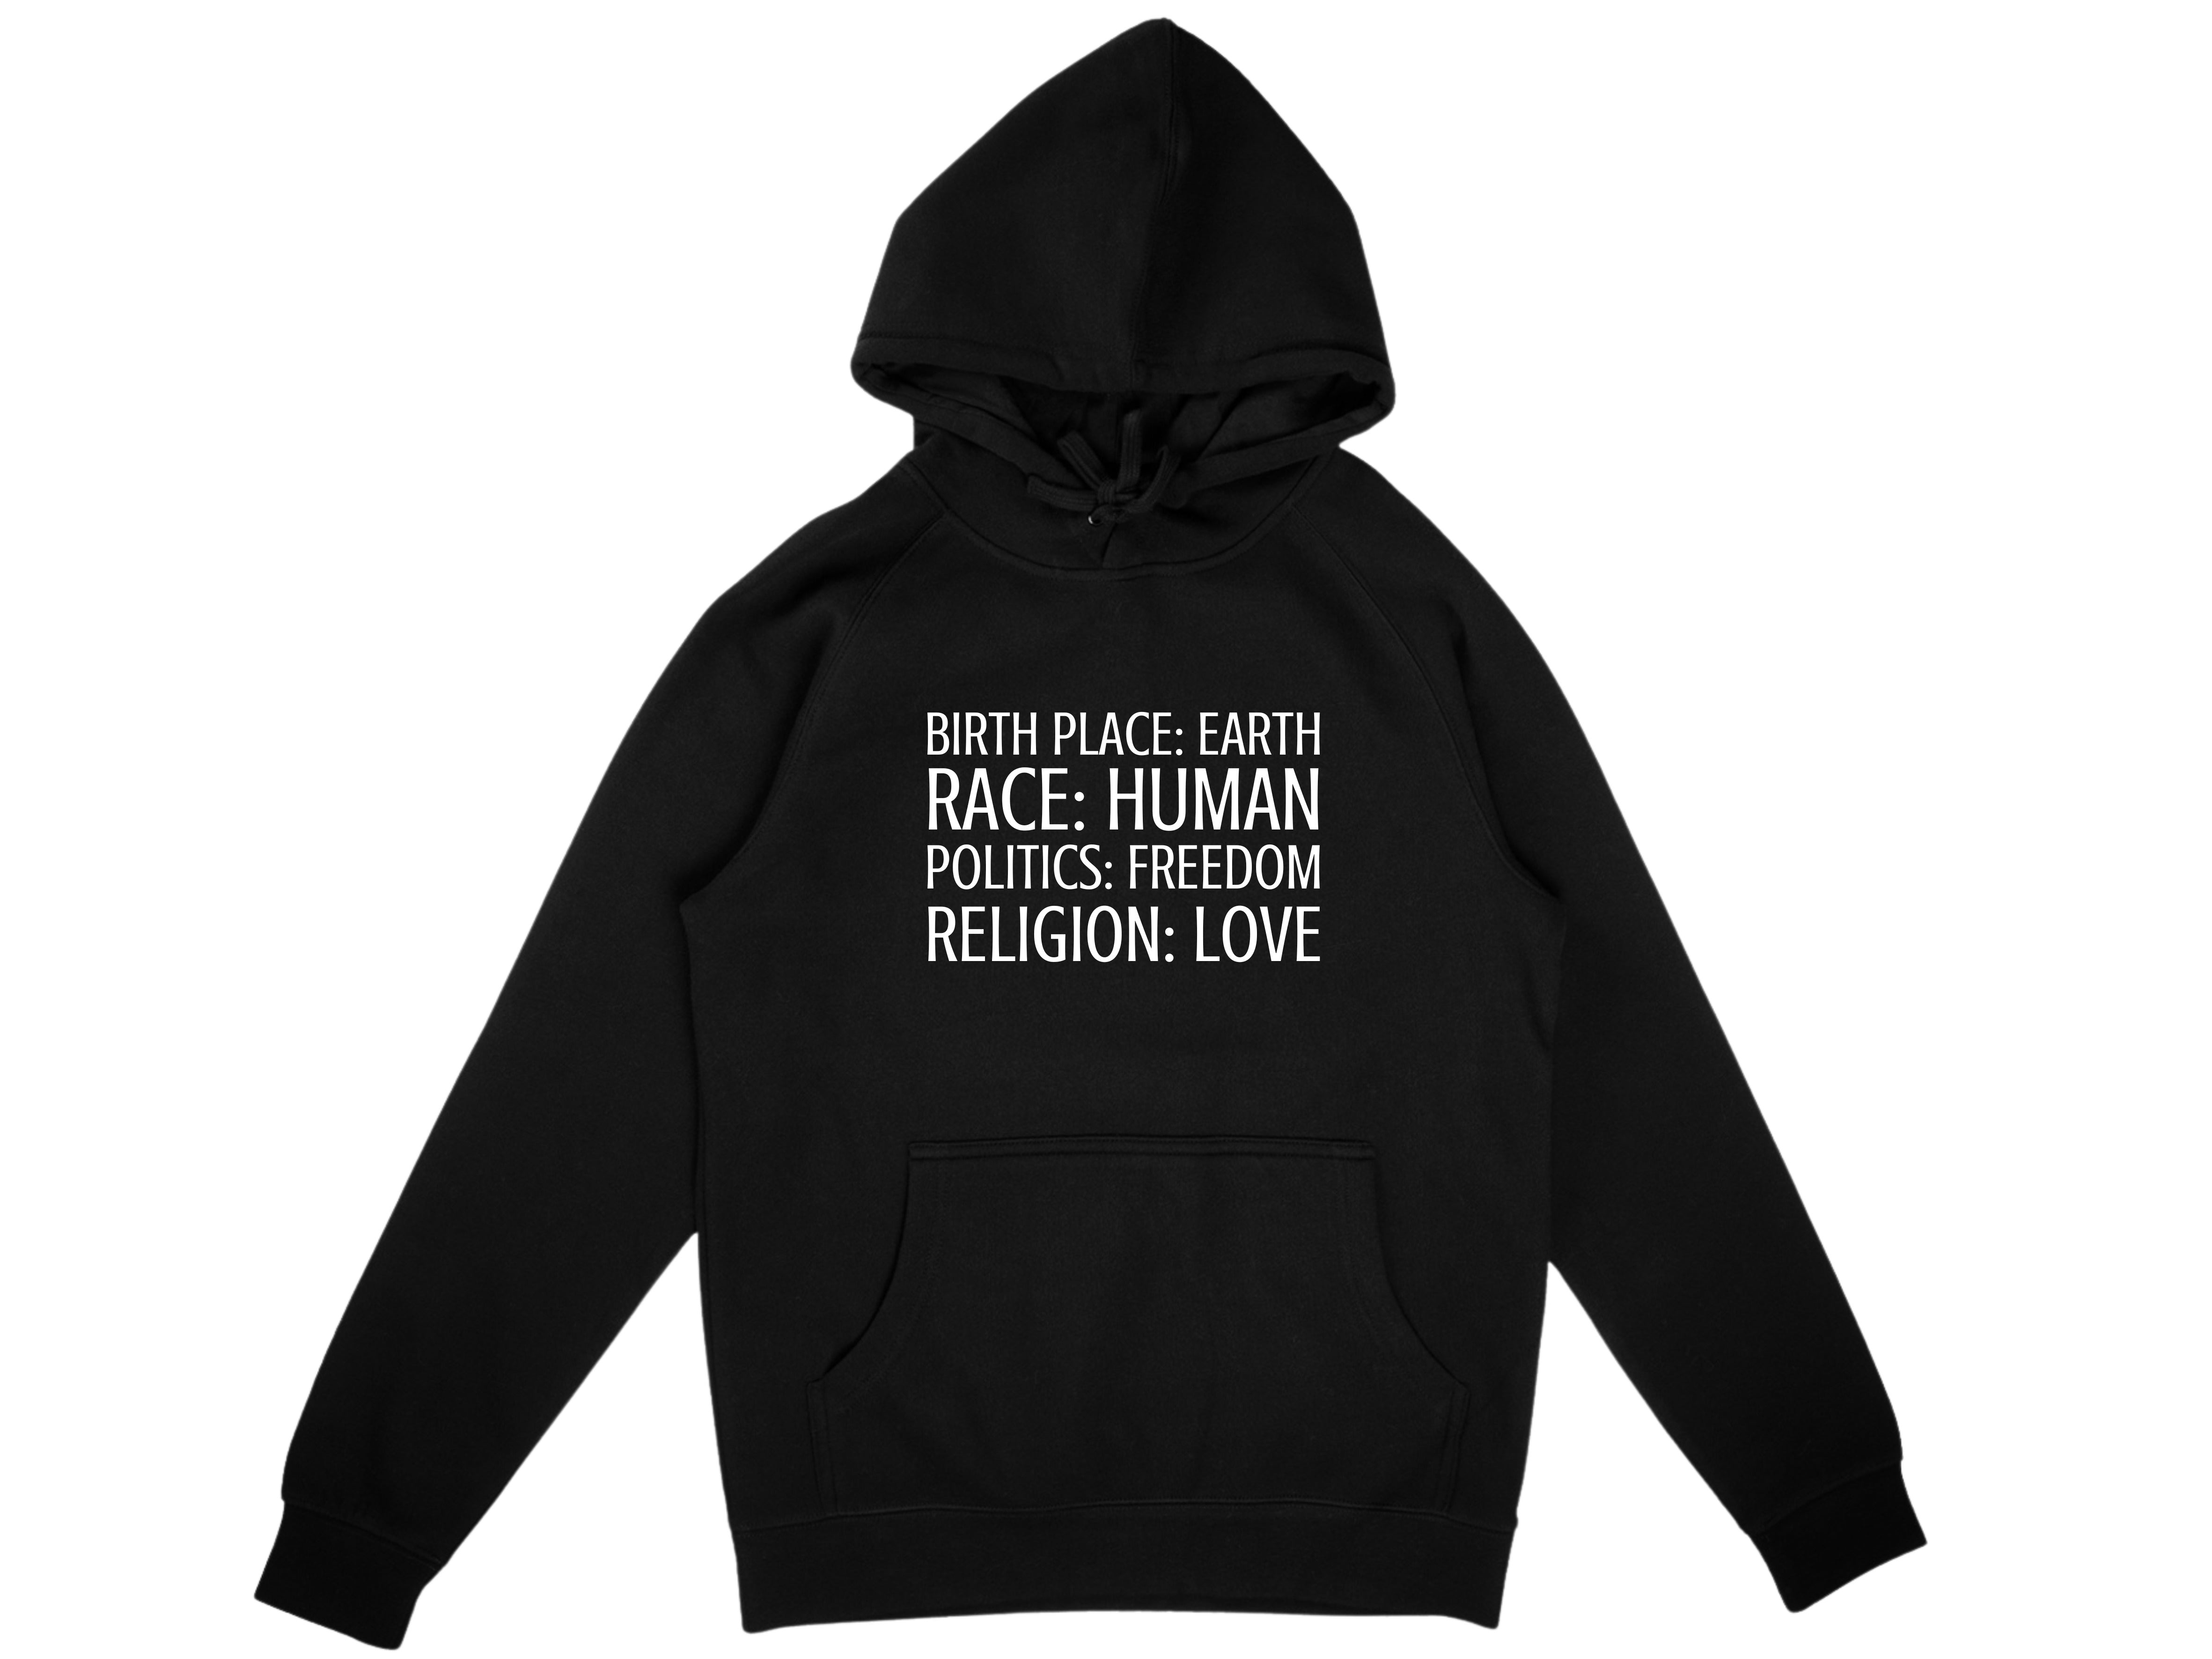 Race:Human